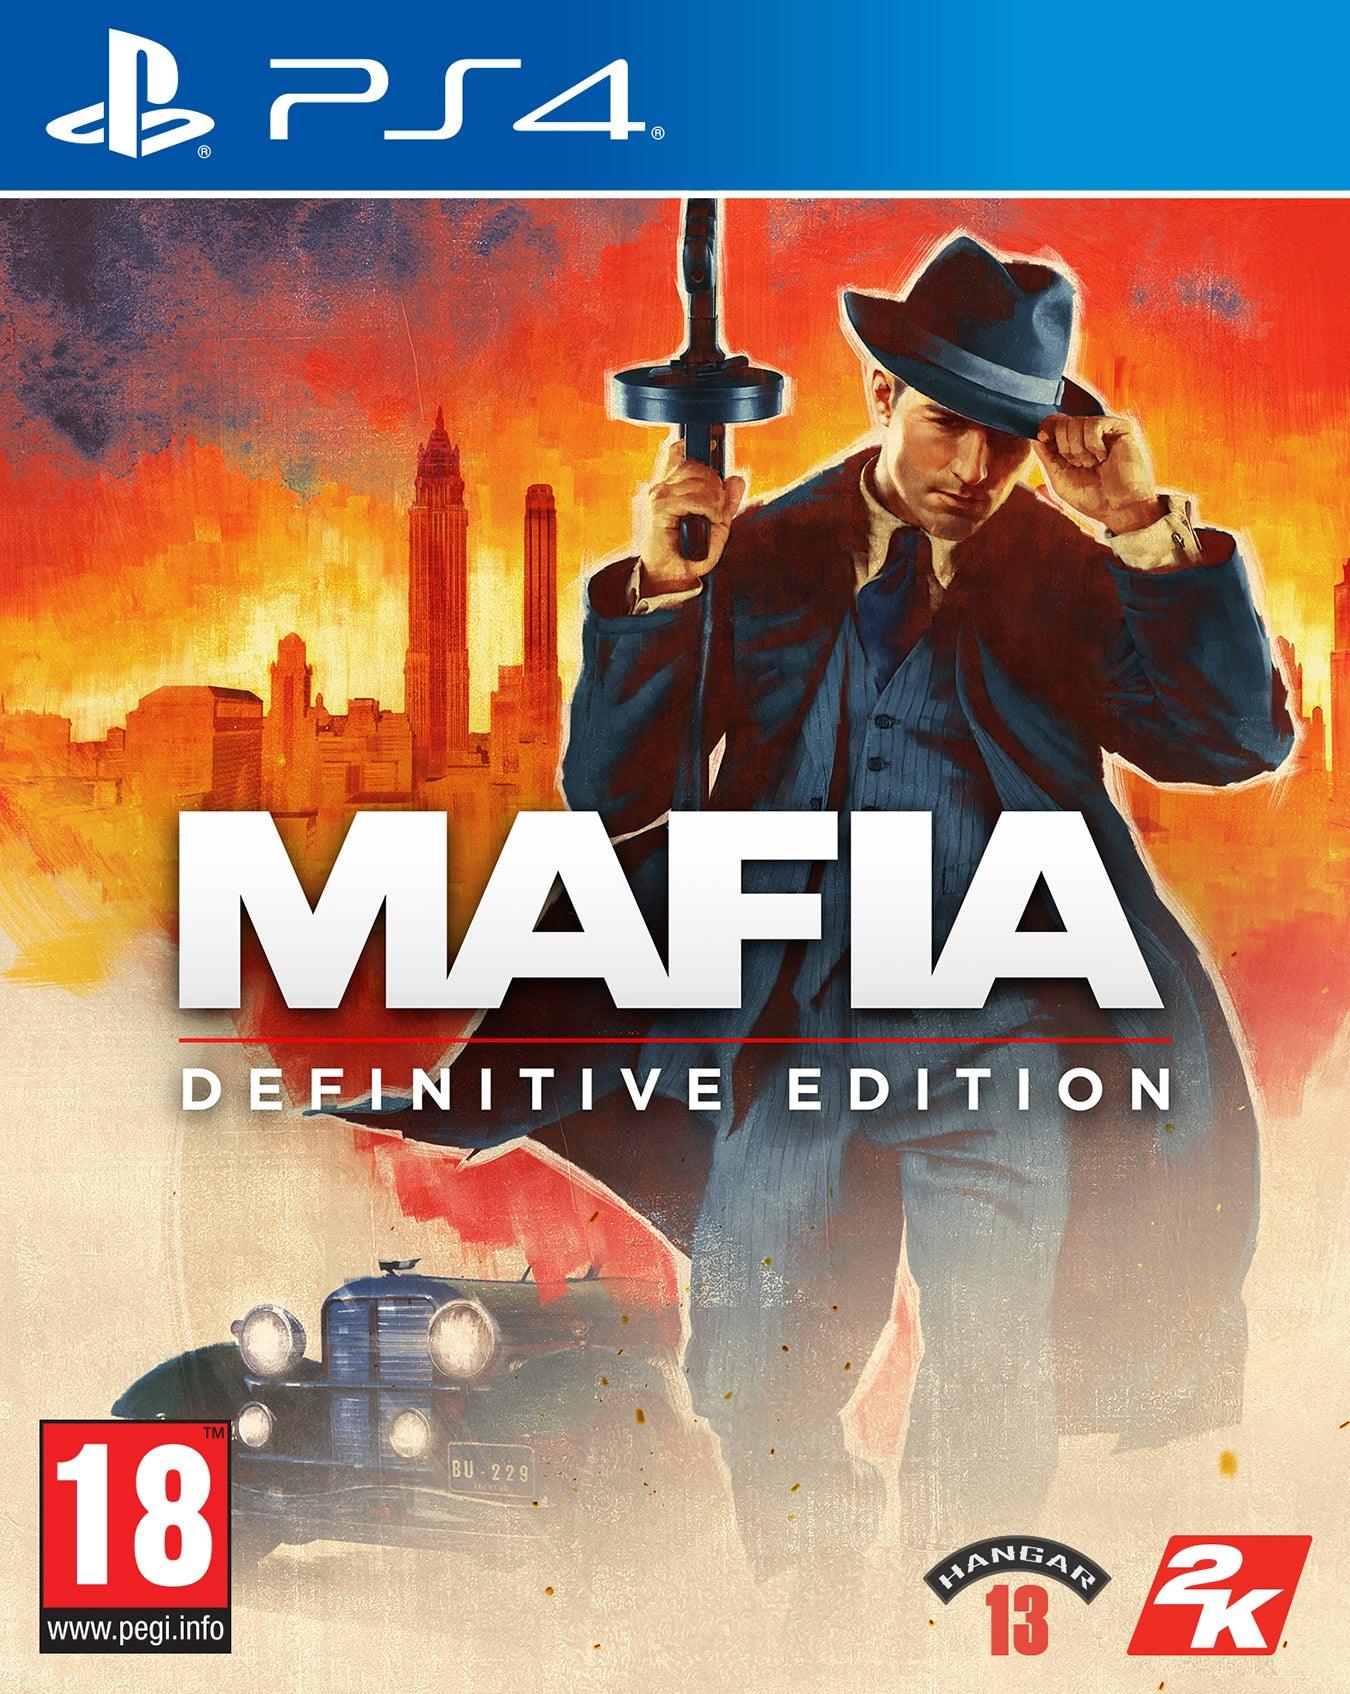 Mafia 1 Definitive Edition - Want a New Gadget